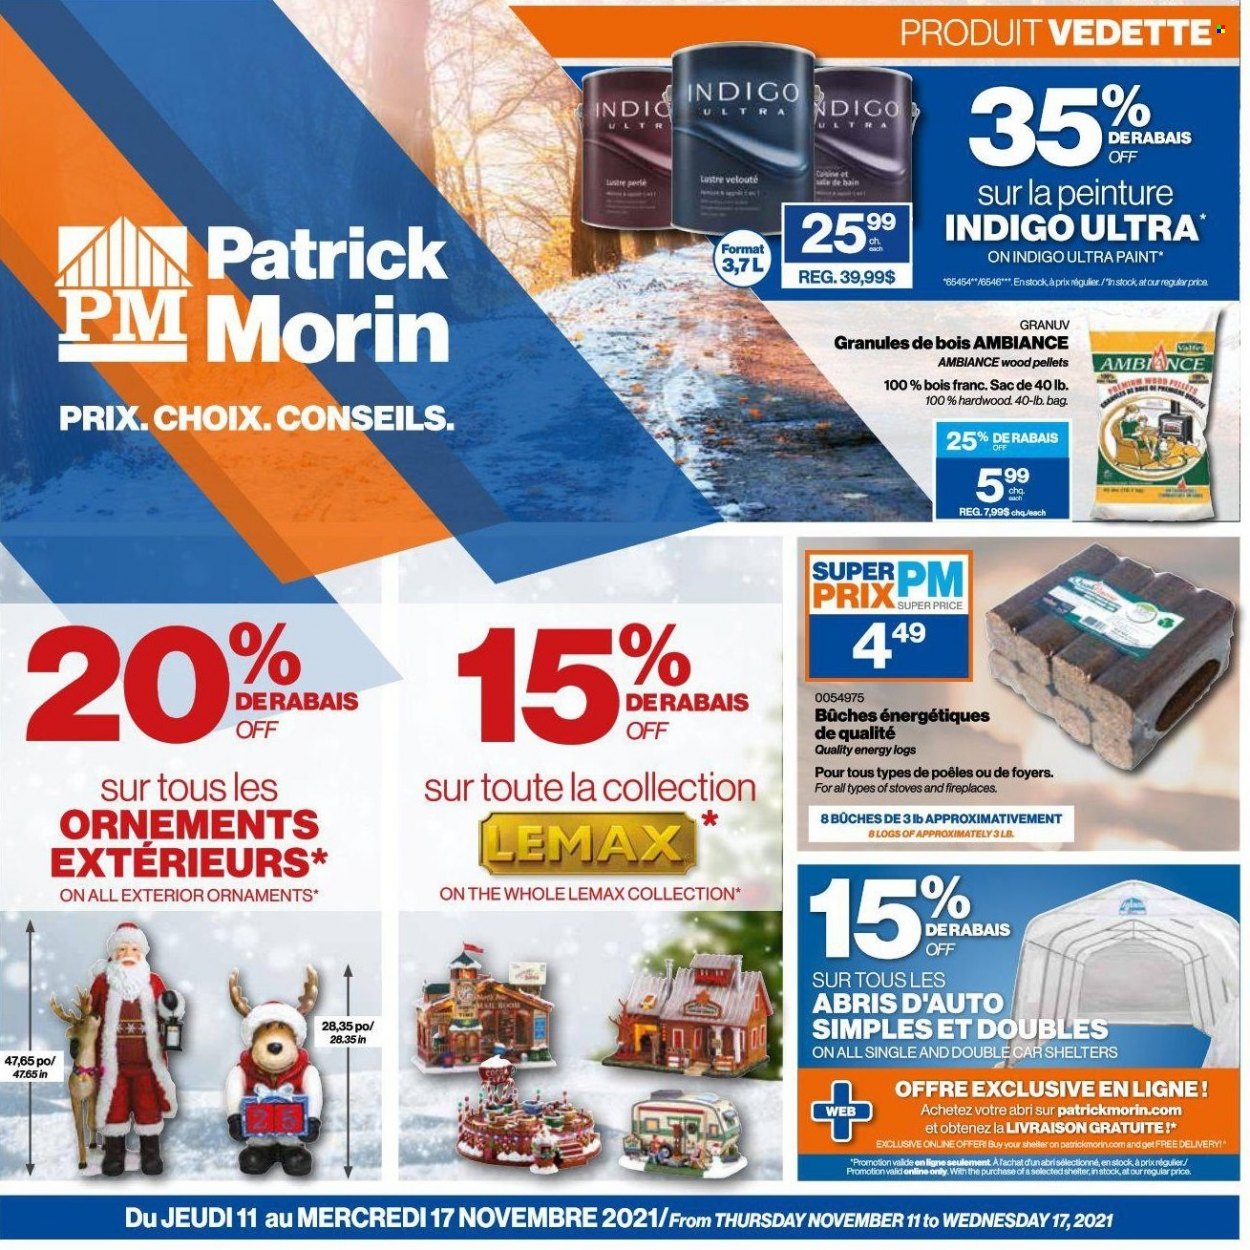 thumbnail - Patrick Morin Flyer - November 11, 2021 - November 17, 2021 - Sales products - Lemax, paint, fireplace. Page 1.